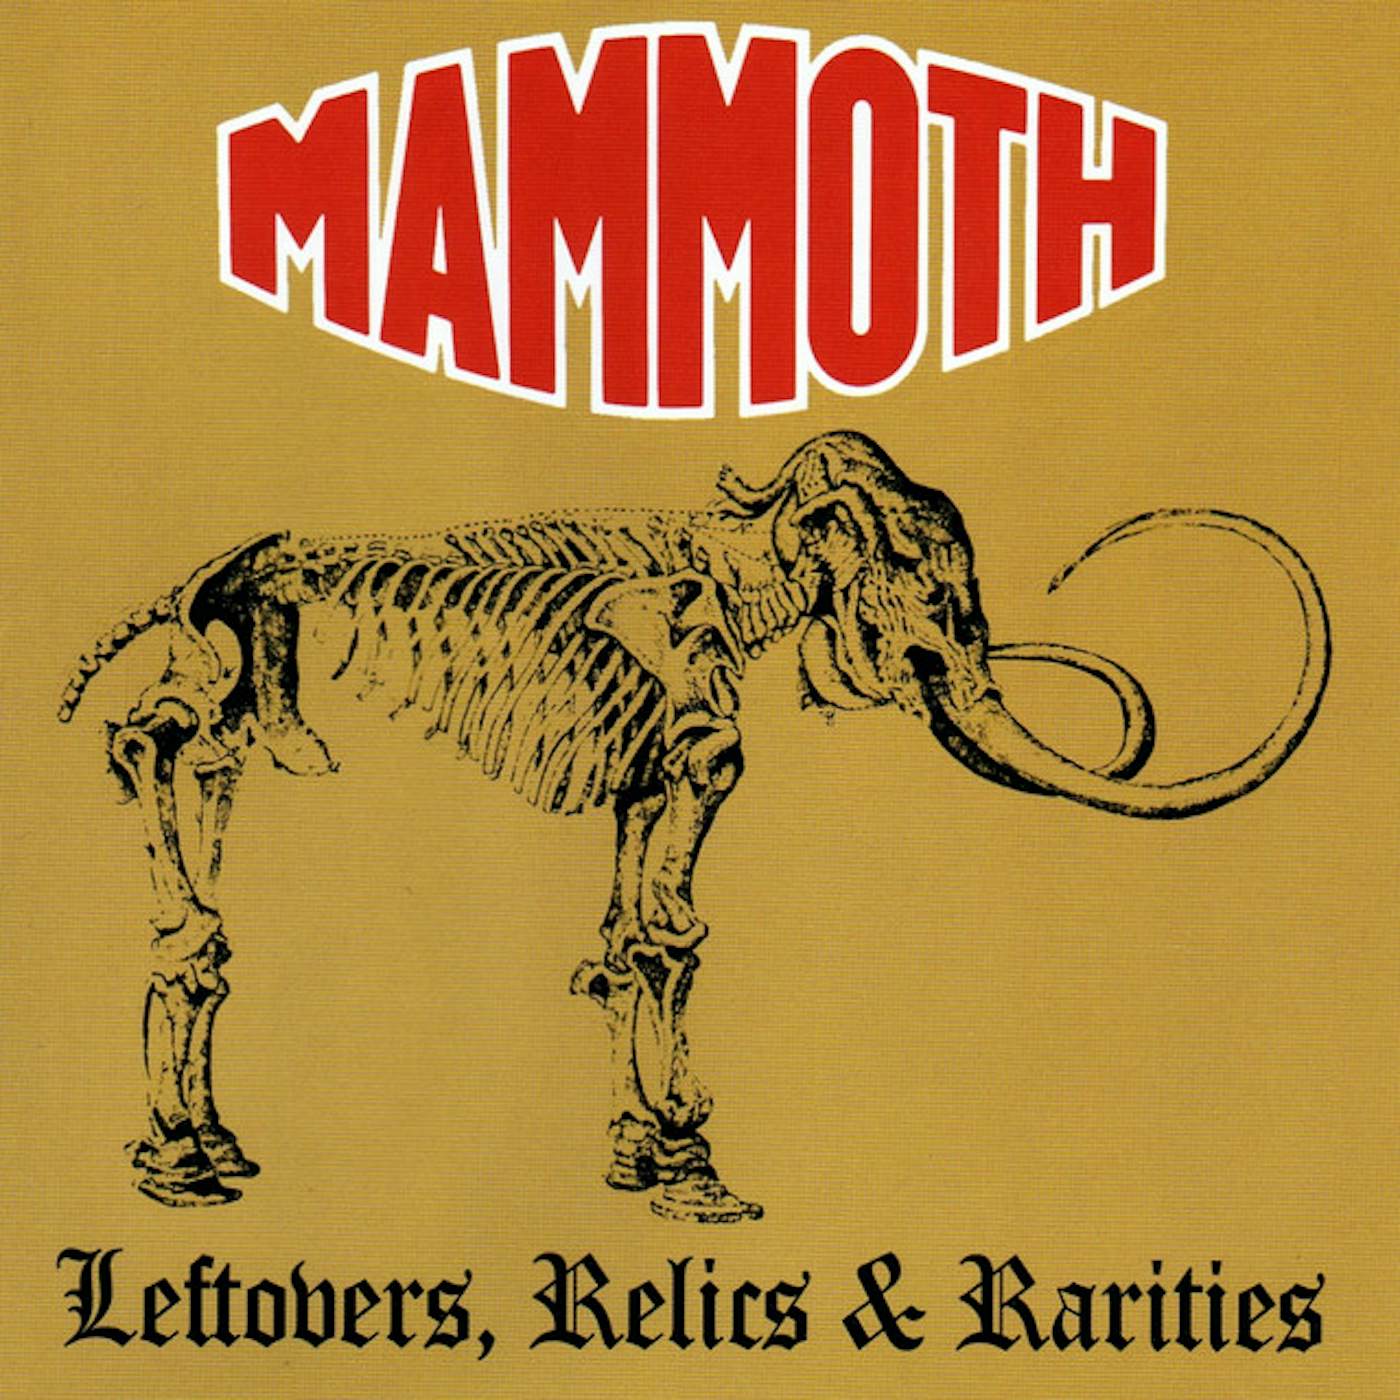 Mammoth LEFTOVERS RELICS & RARITIES CD